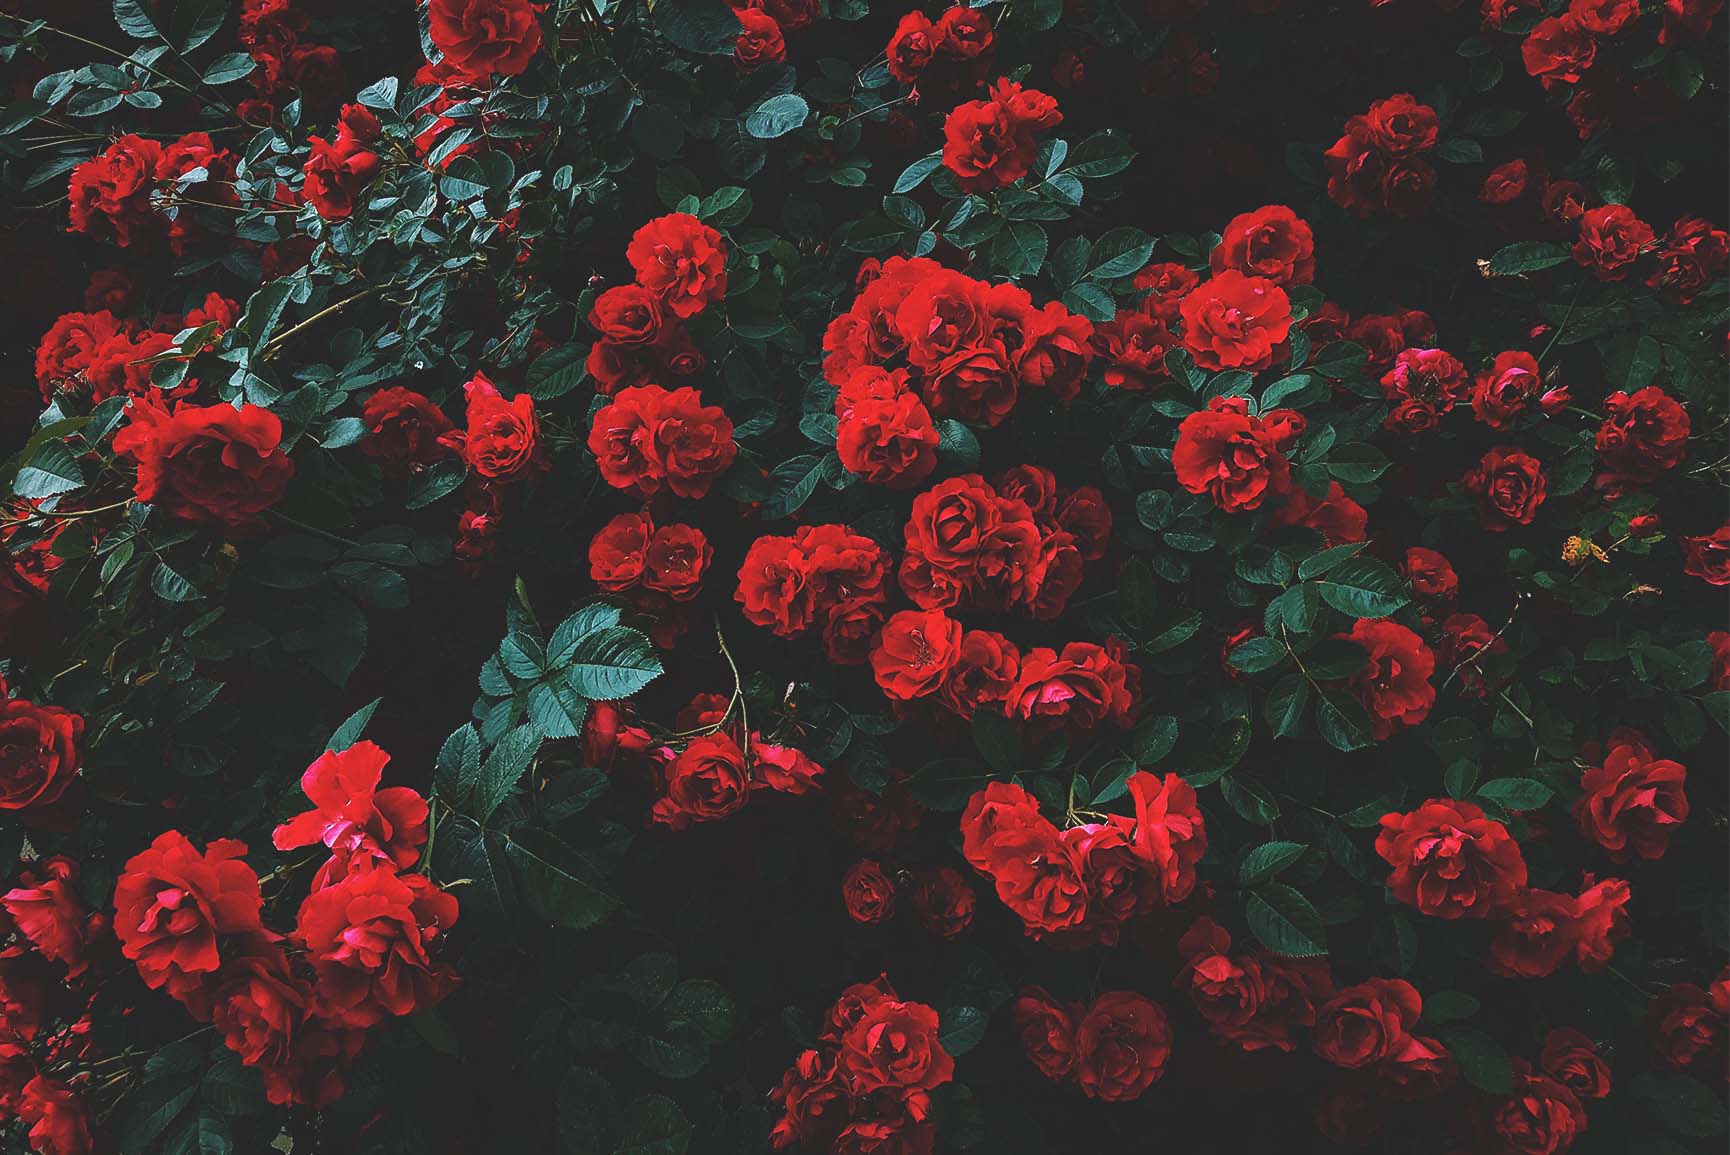 1730x1155 دزينة من الورود الحمراء خلفية آيفون لعيد الحب